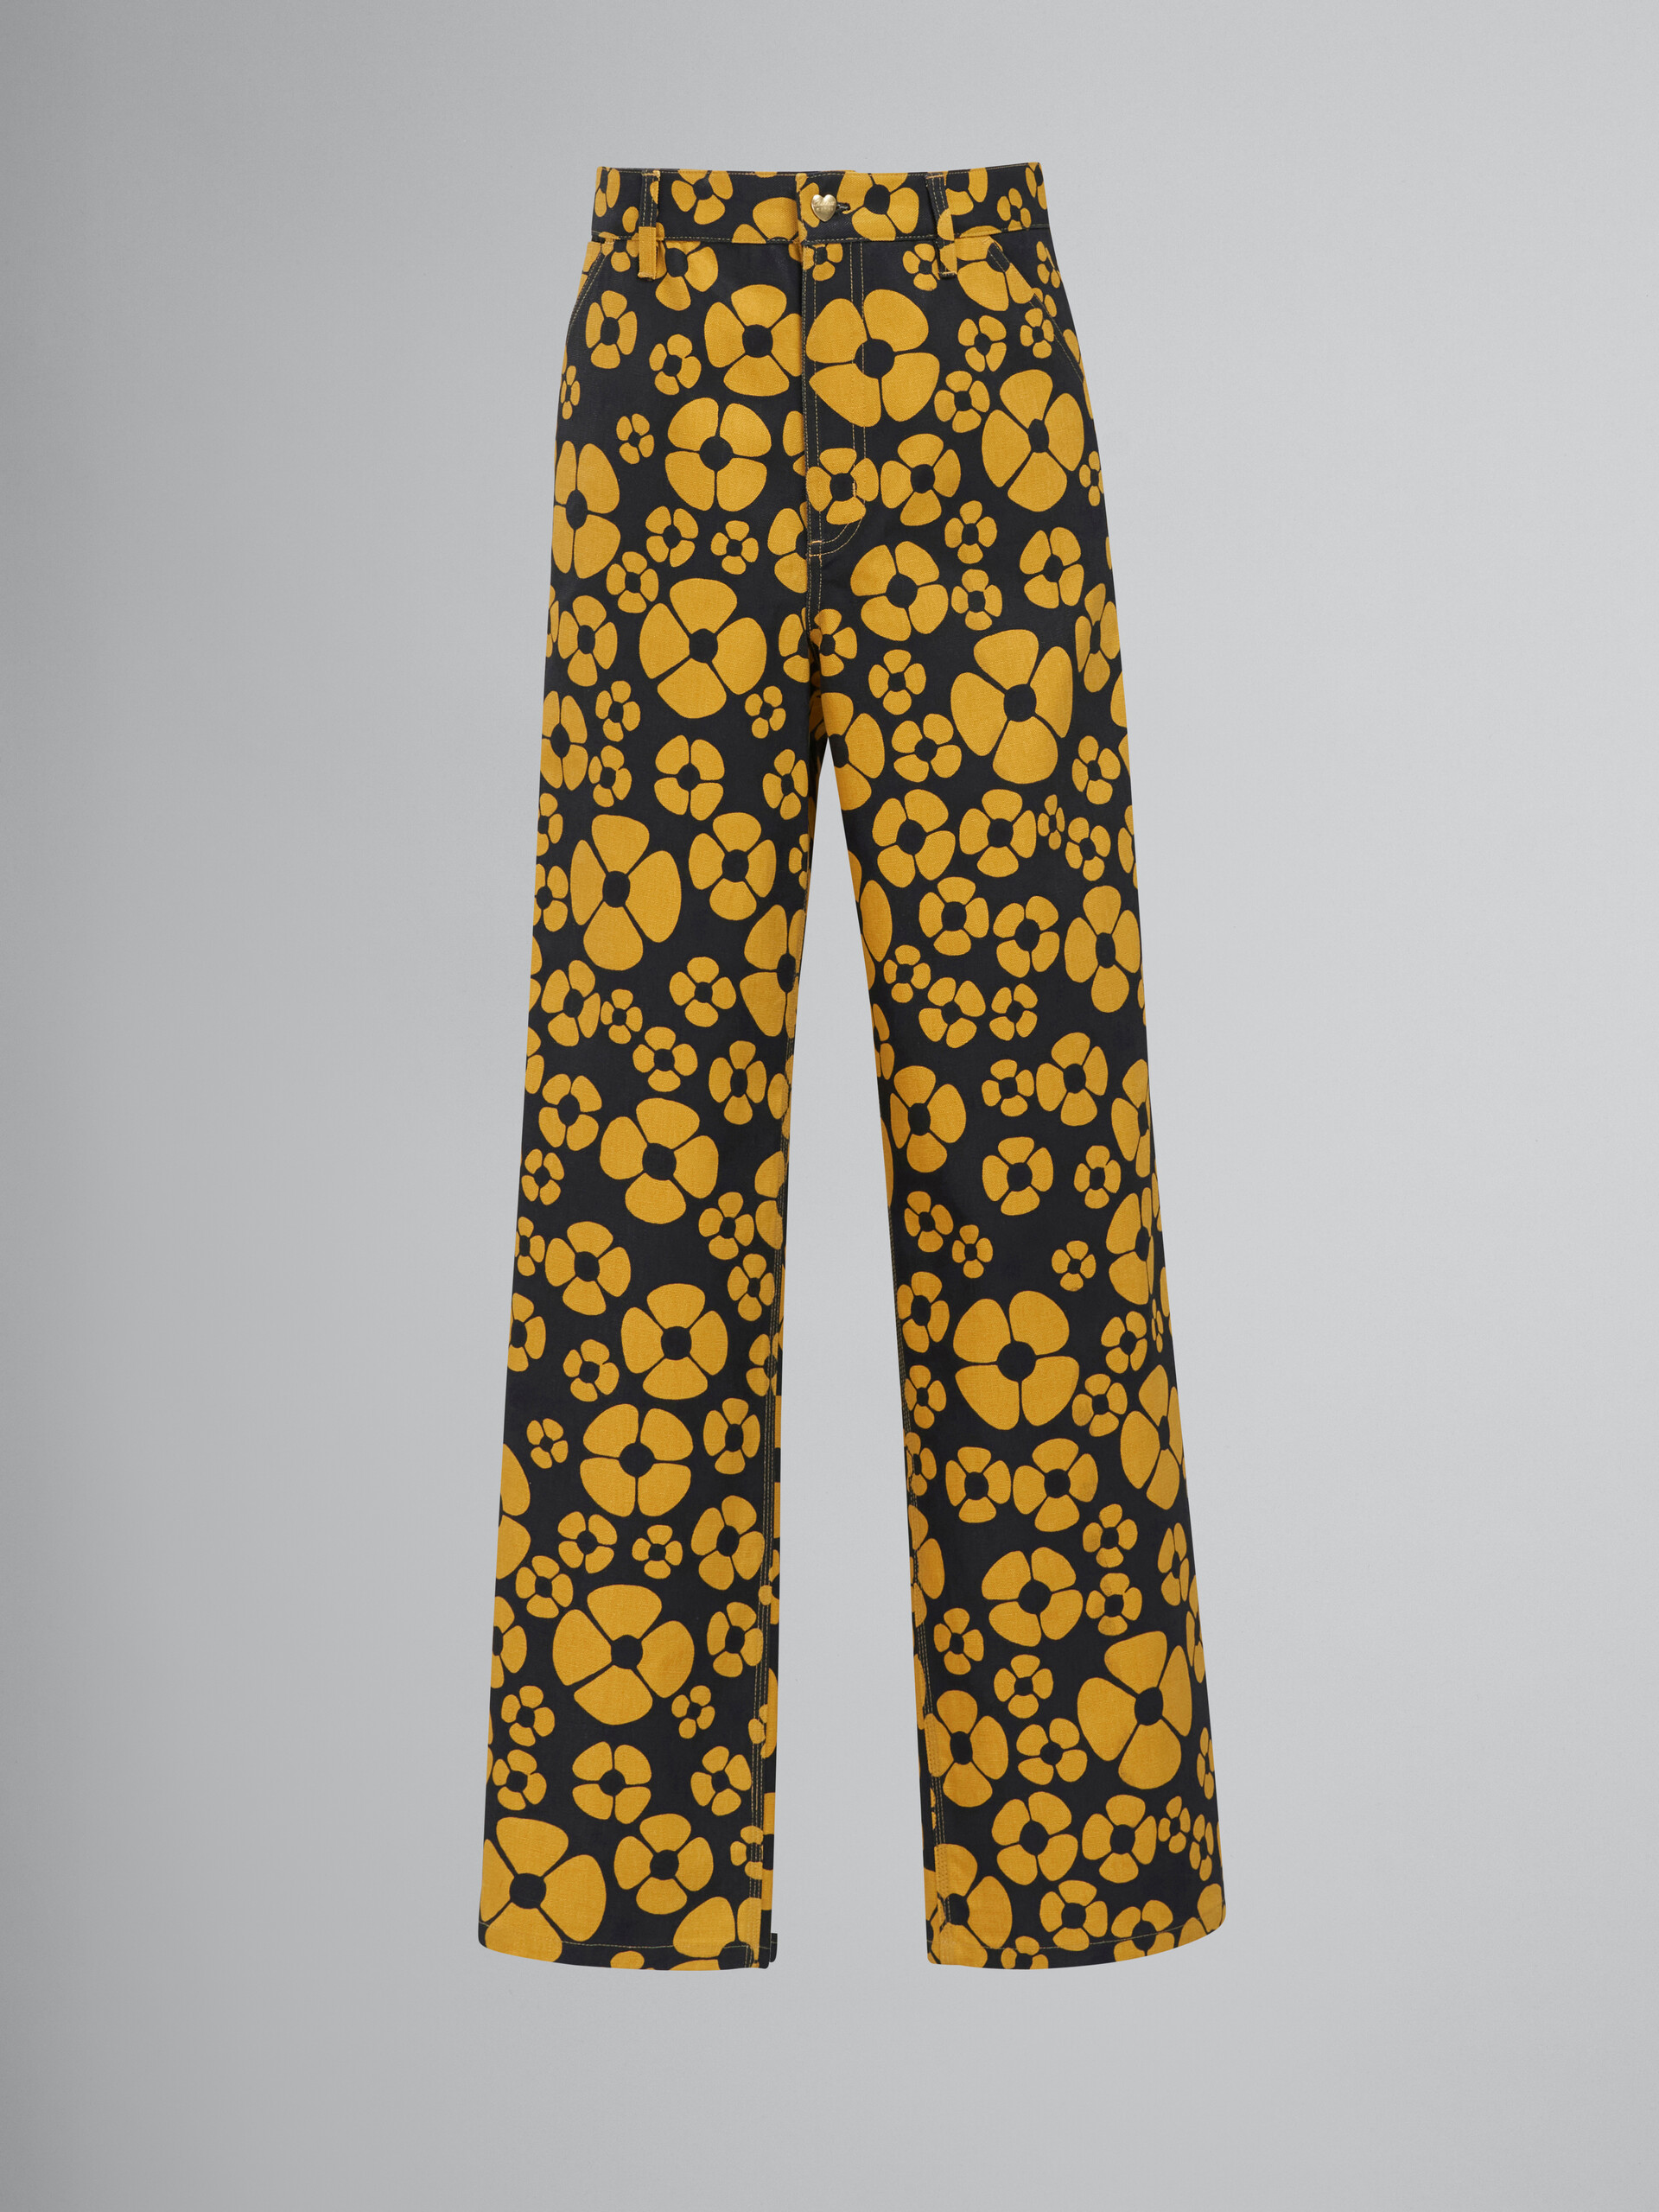 MARNI x CARHARTT WIP - Pantaloni floreali gialli - Pantaloni - Image 1